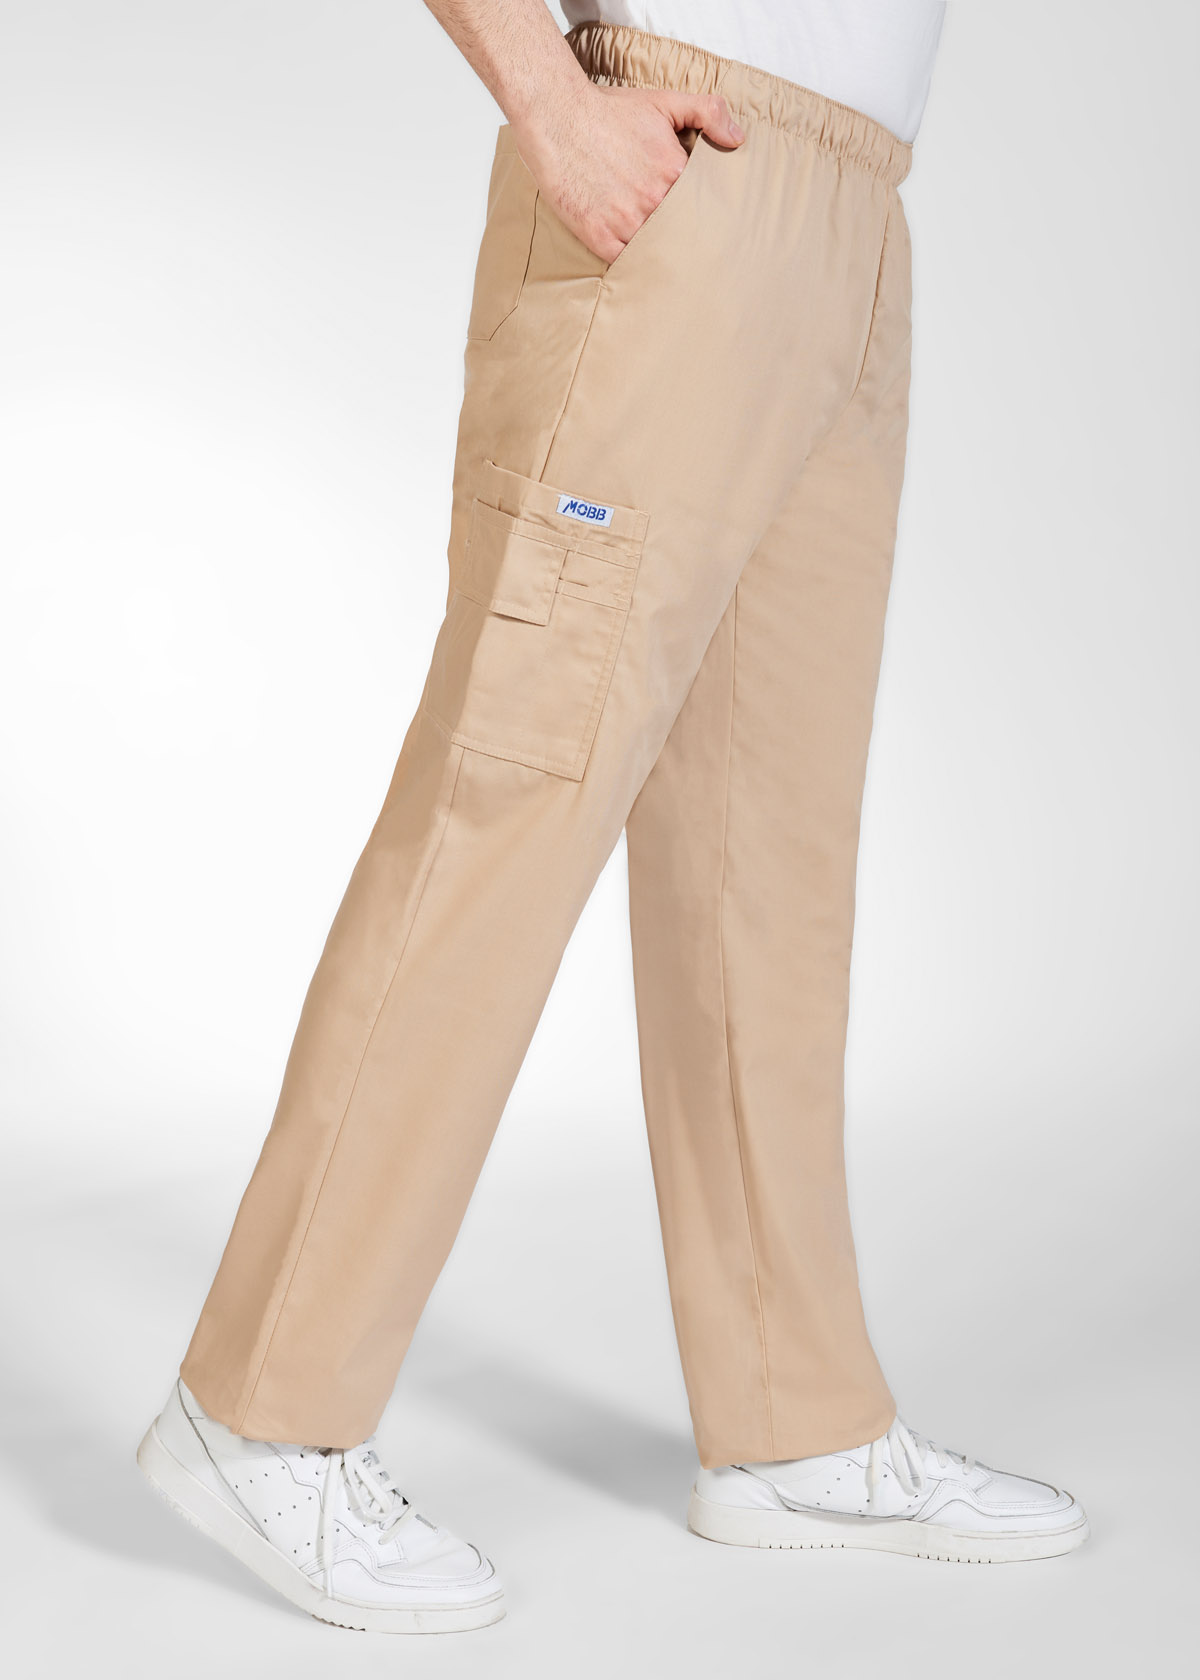 310/307 – 4 pocket drawstring/elastic Scrub Set – MOBB – Top Uniforms